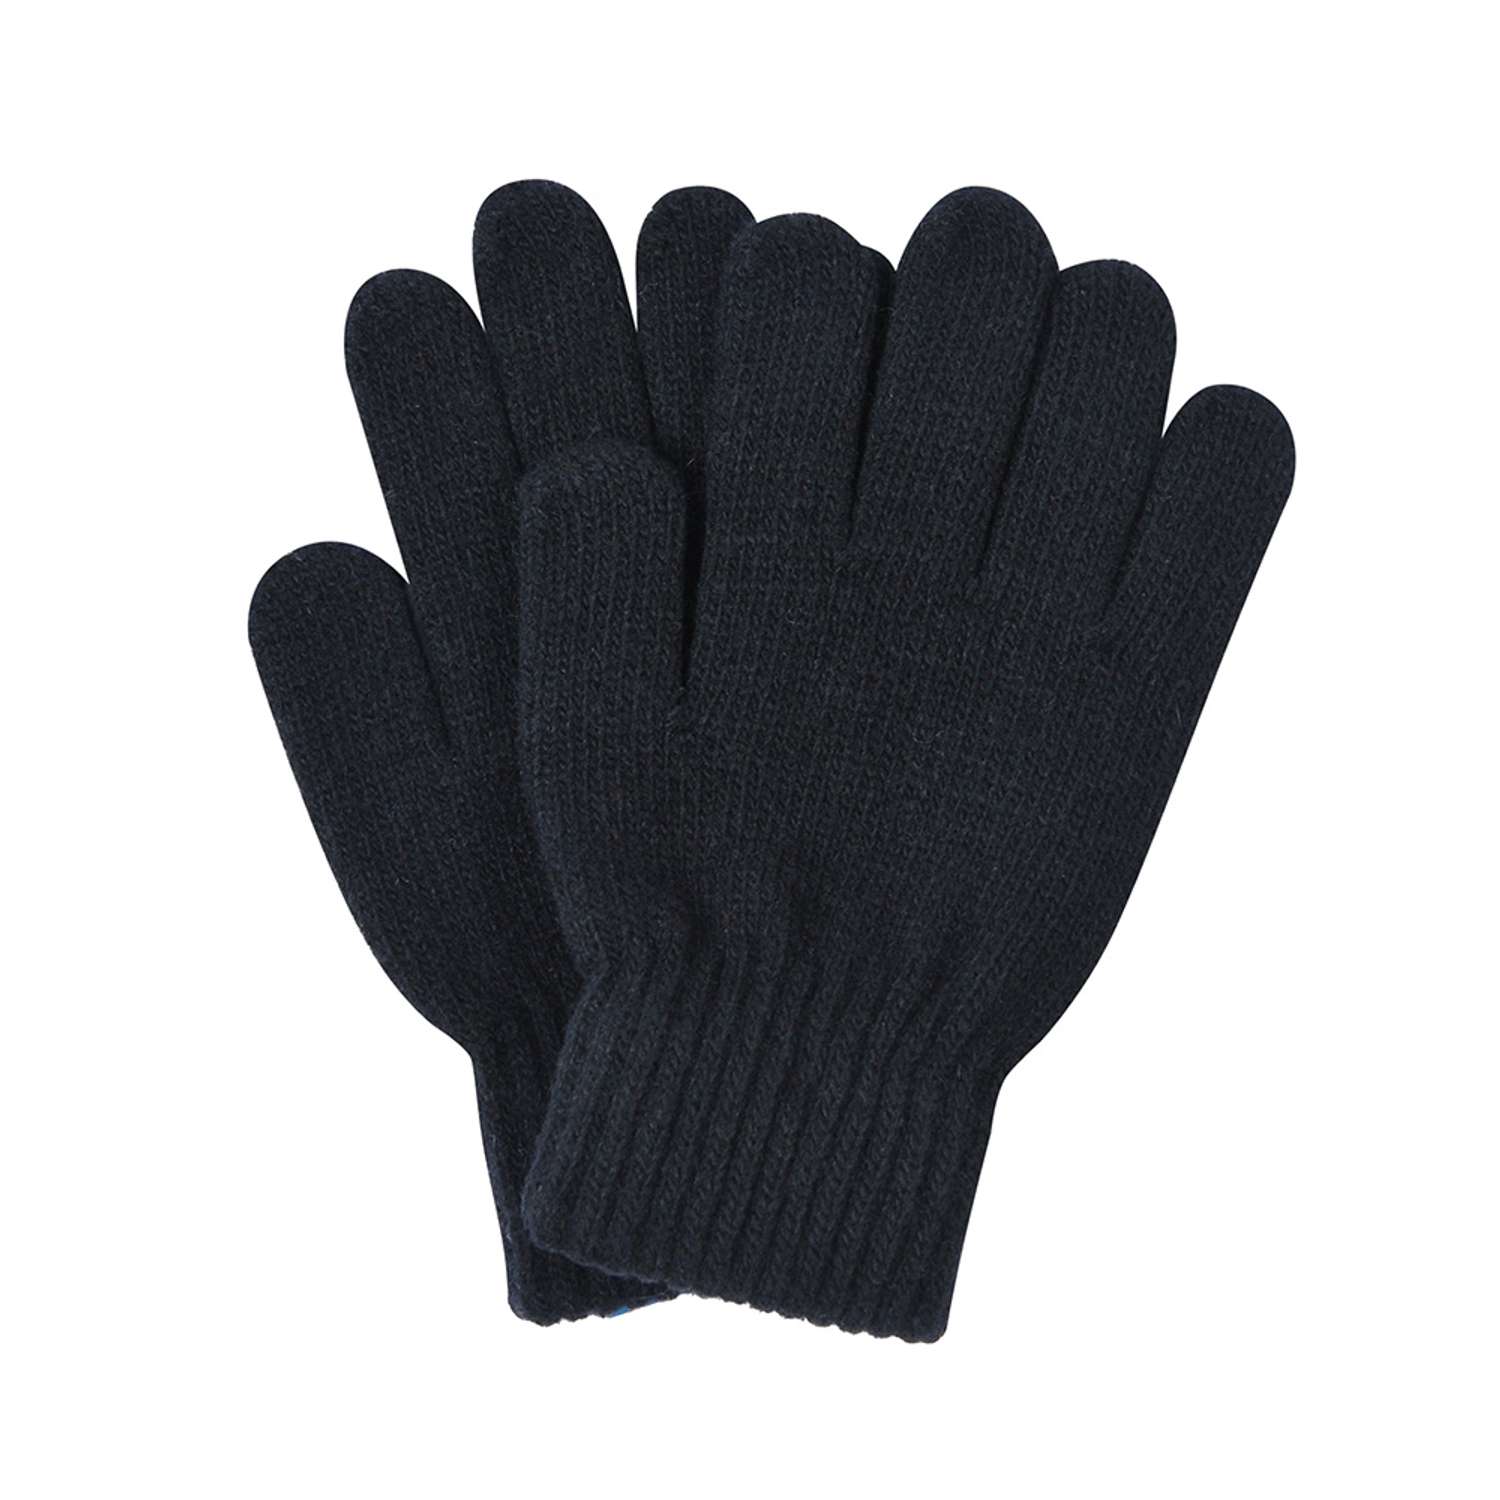 Перчатки S.gloves S 2163-M черный - фото 1